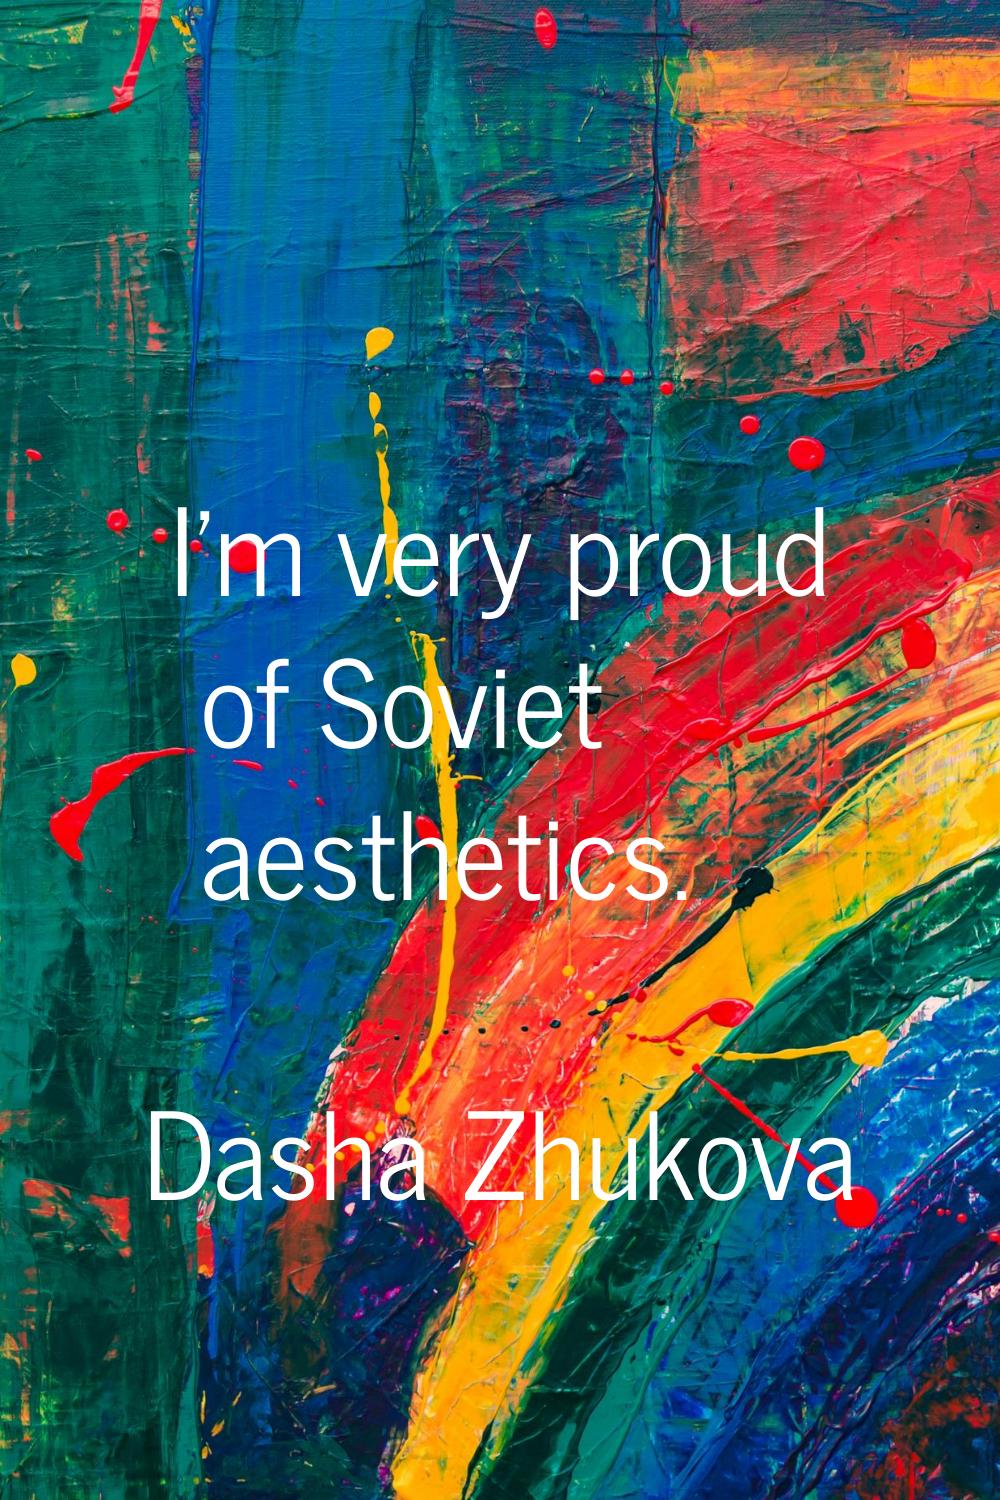 I'm very proud of Soviet aesthetics.